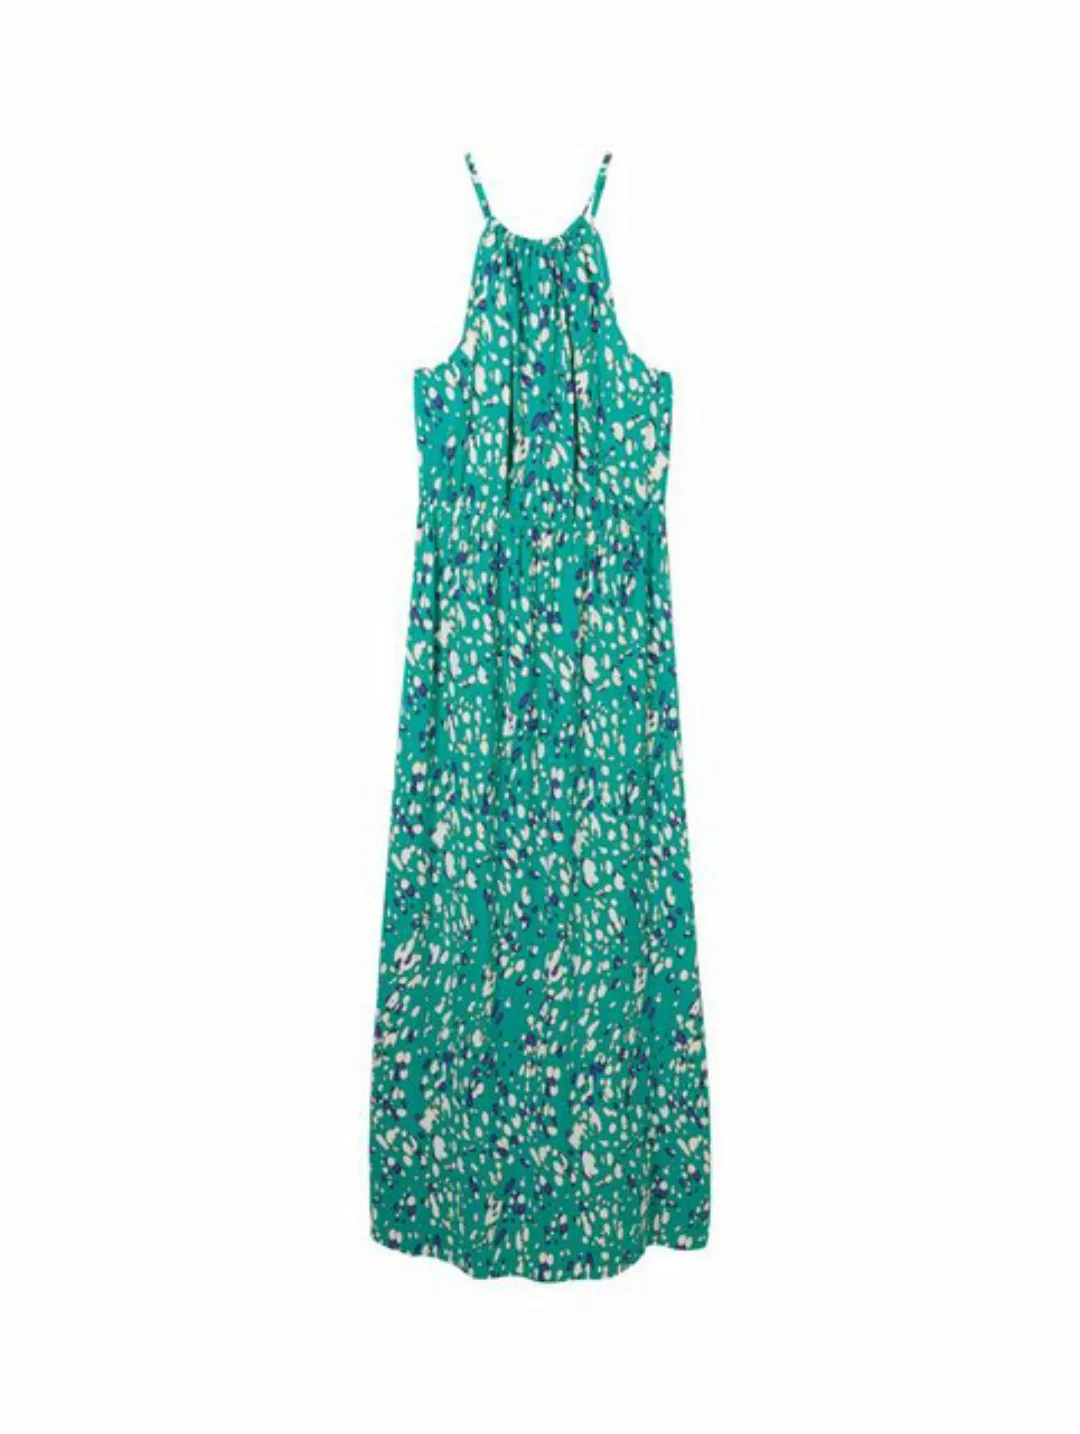 TOM TAILOR Denim Sommerkleid halterneck maxi dress, abstract green dot prin günstig online kaufen